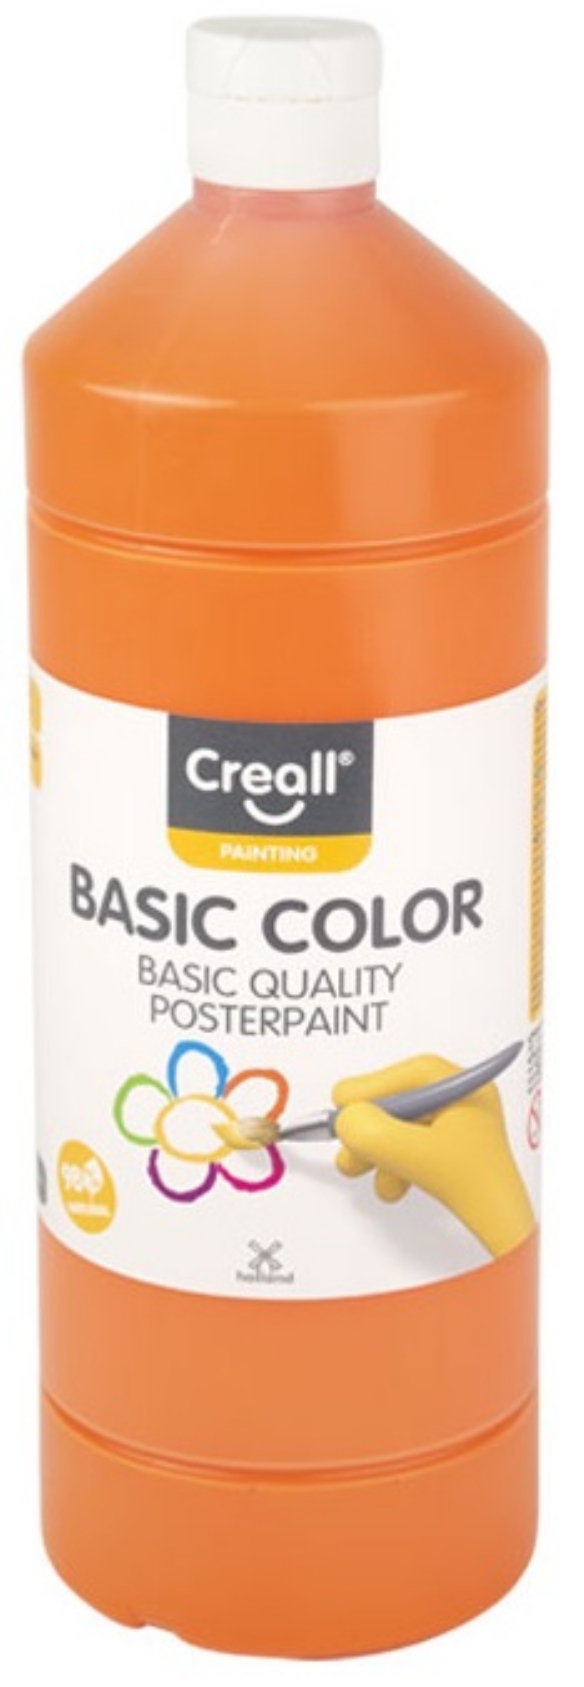 Basic-color plakkaatverf, 1000 ml, 04 oranje kopen?